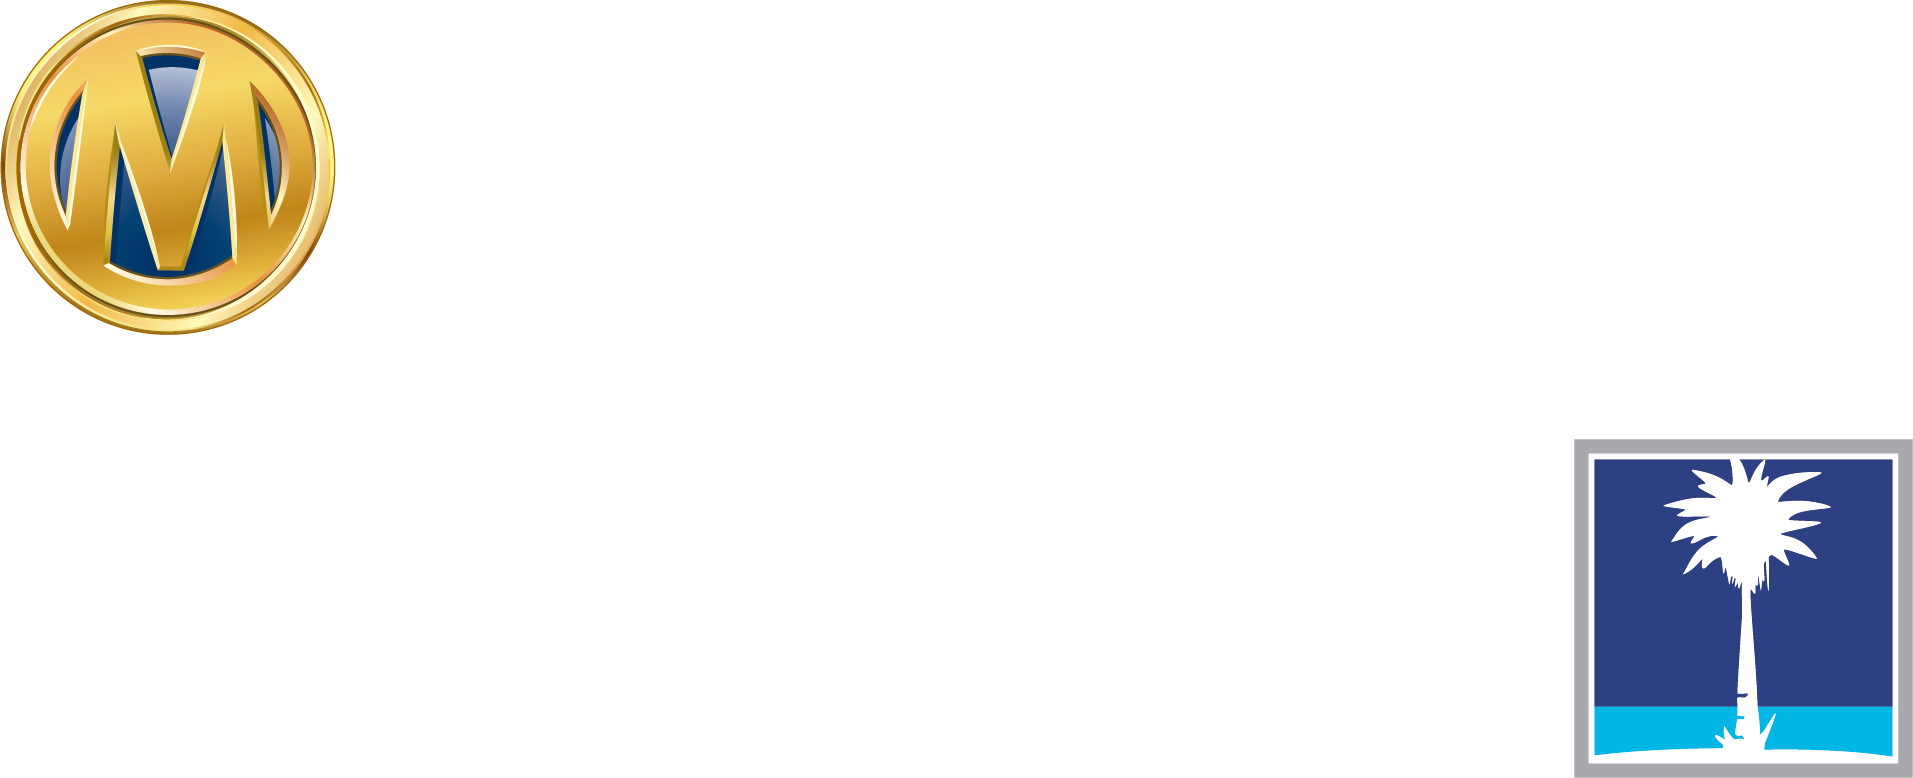 Cox Automotive d.b.a. Manheim Tampa Company Logo